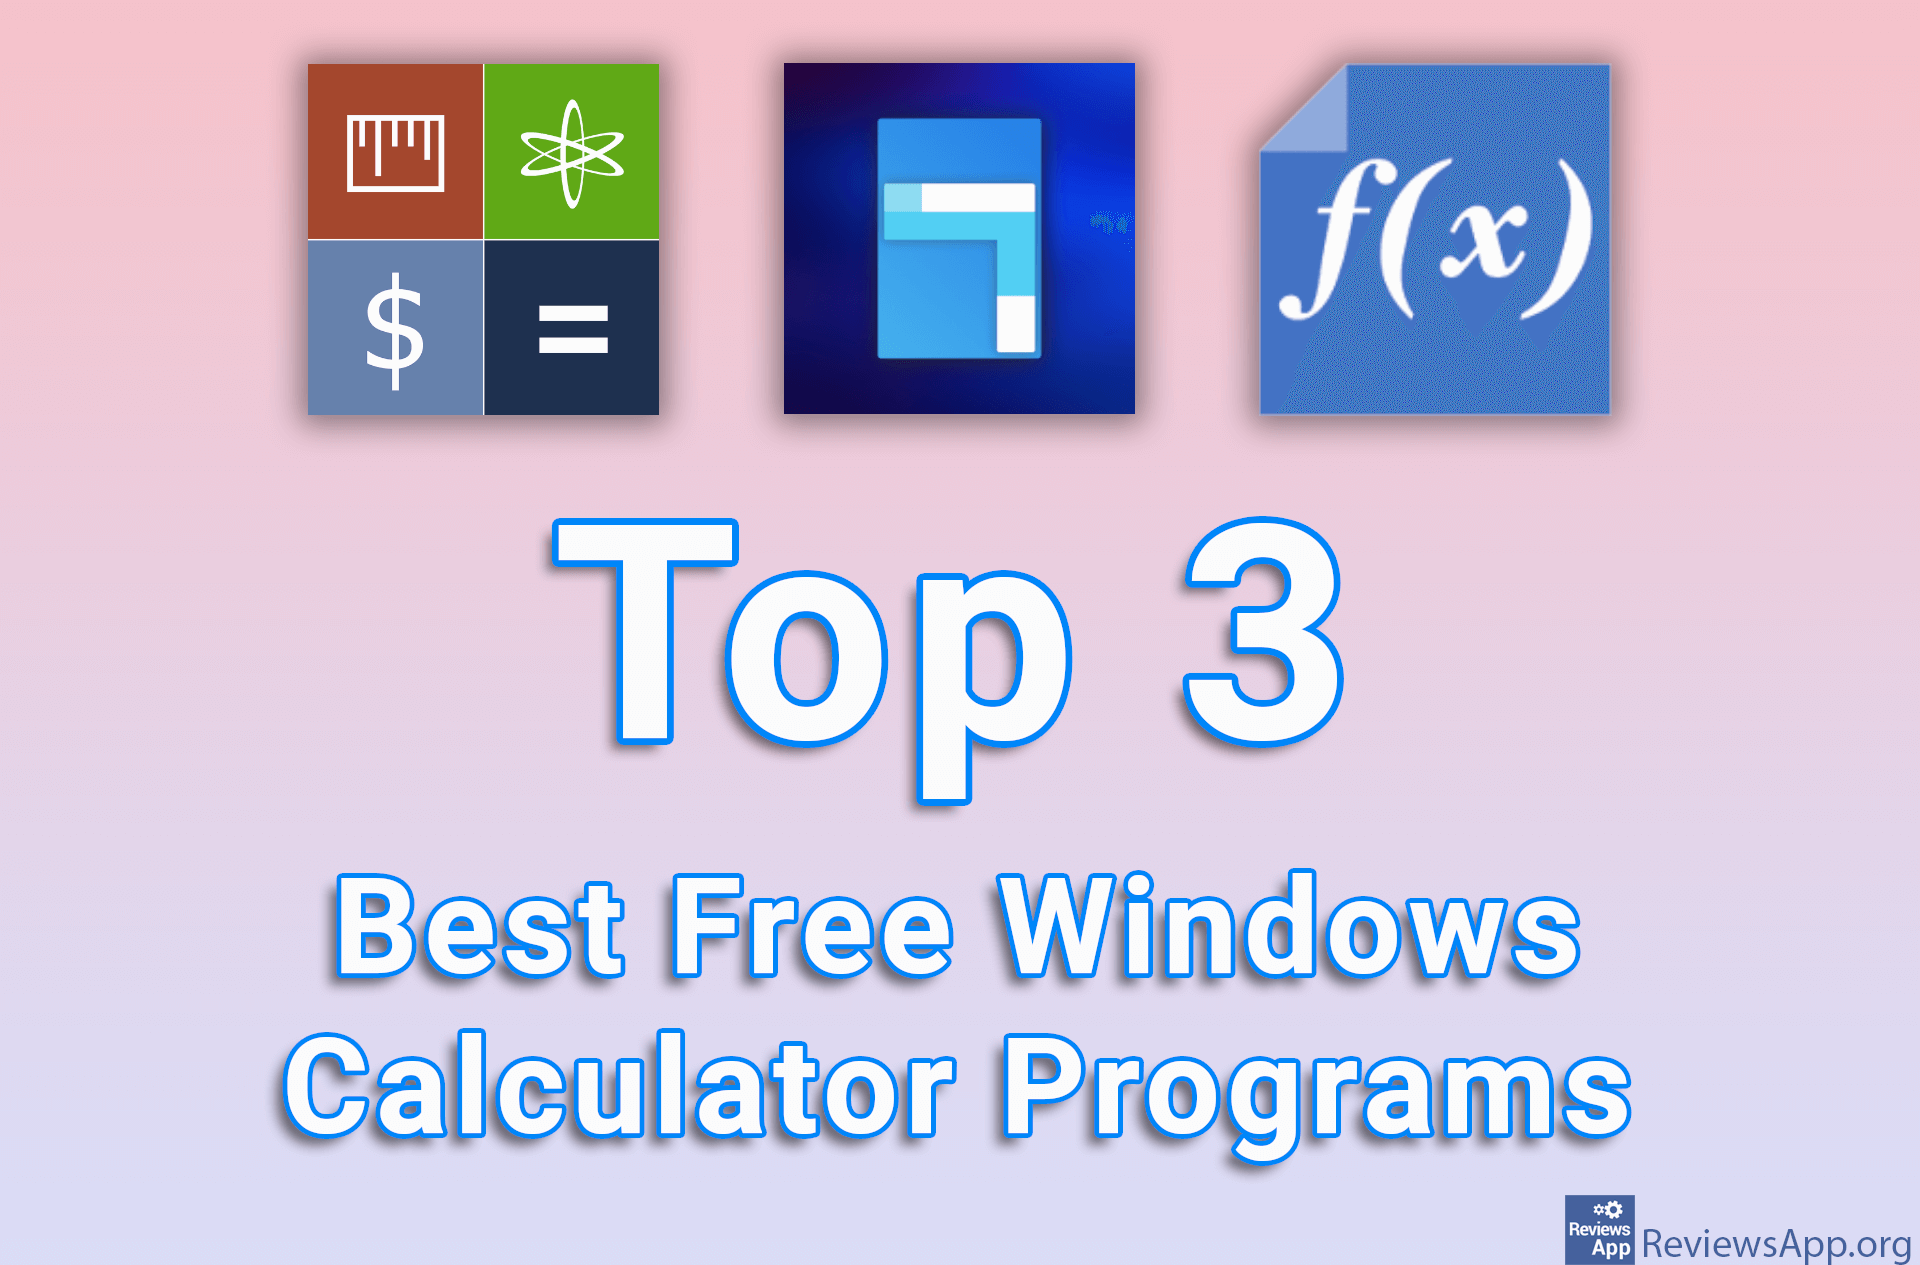 Top 3 Best Free Windows Calculator Programs